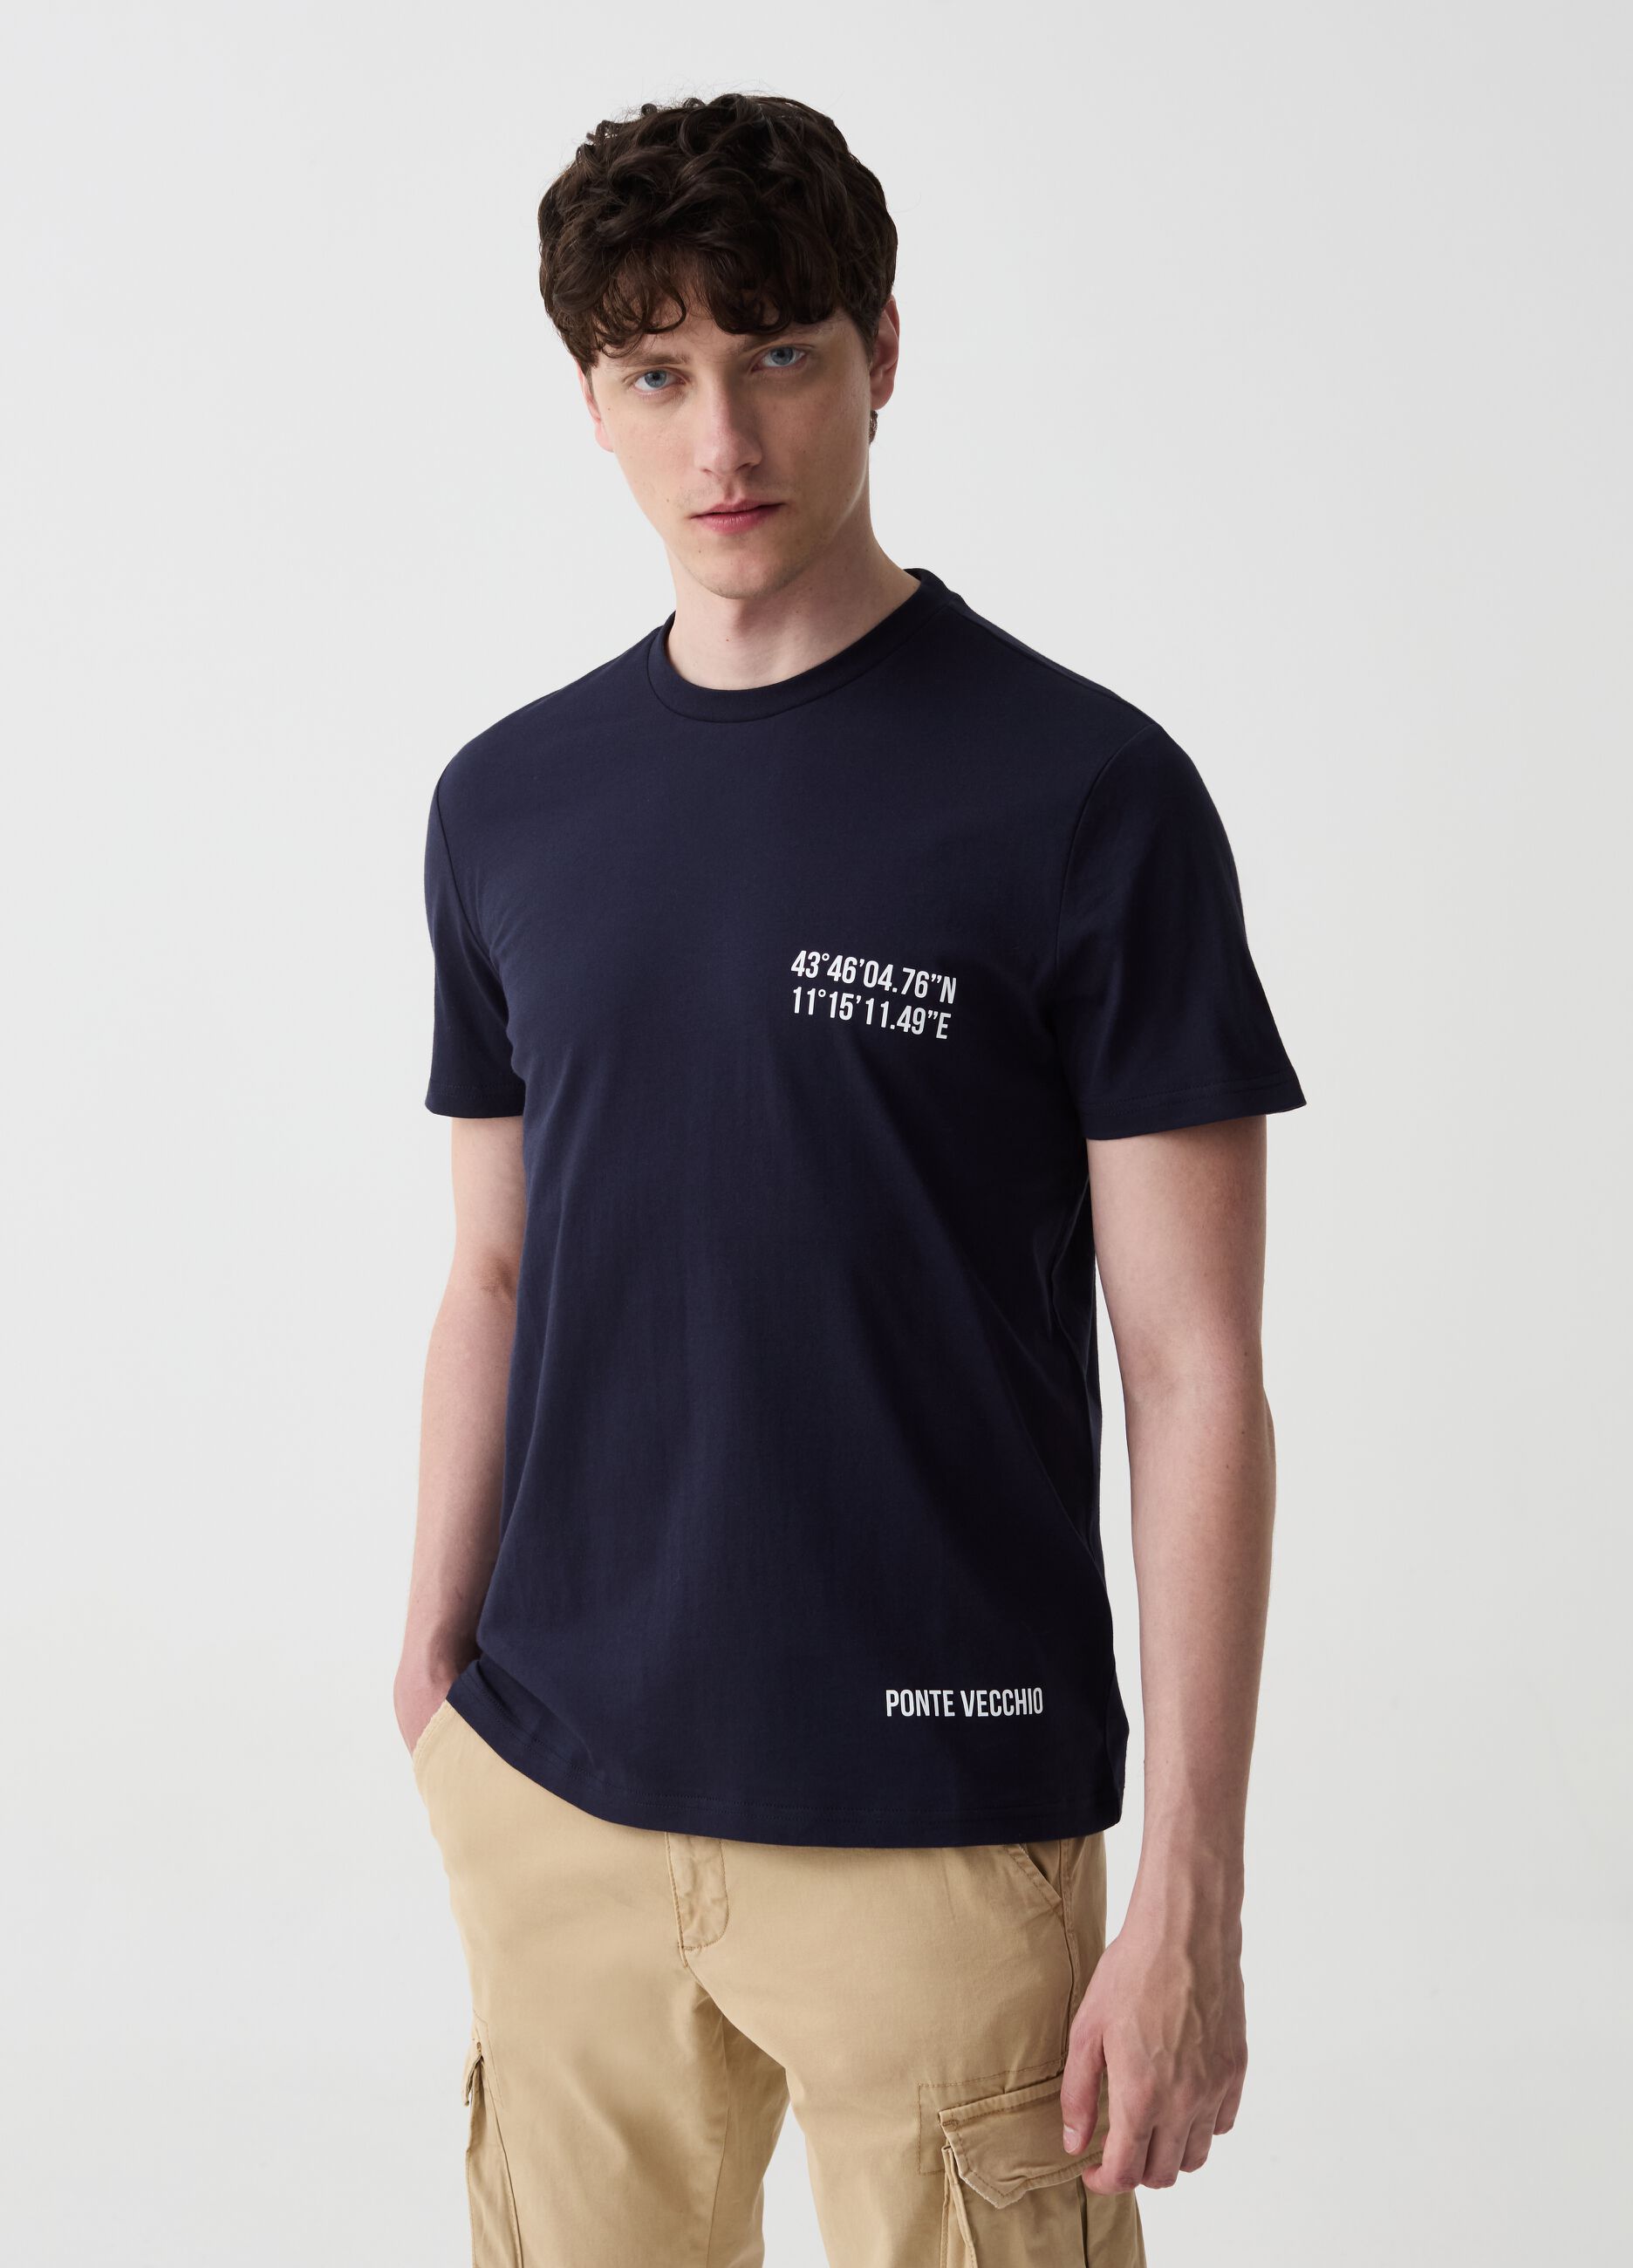 T-shirt with Florence Ponte Vecchio print